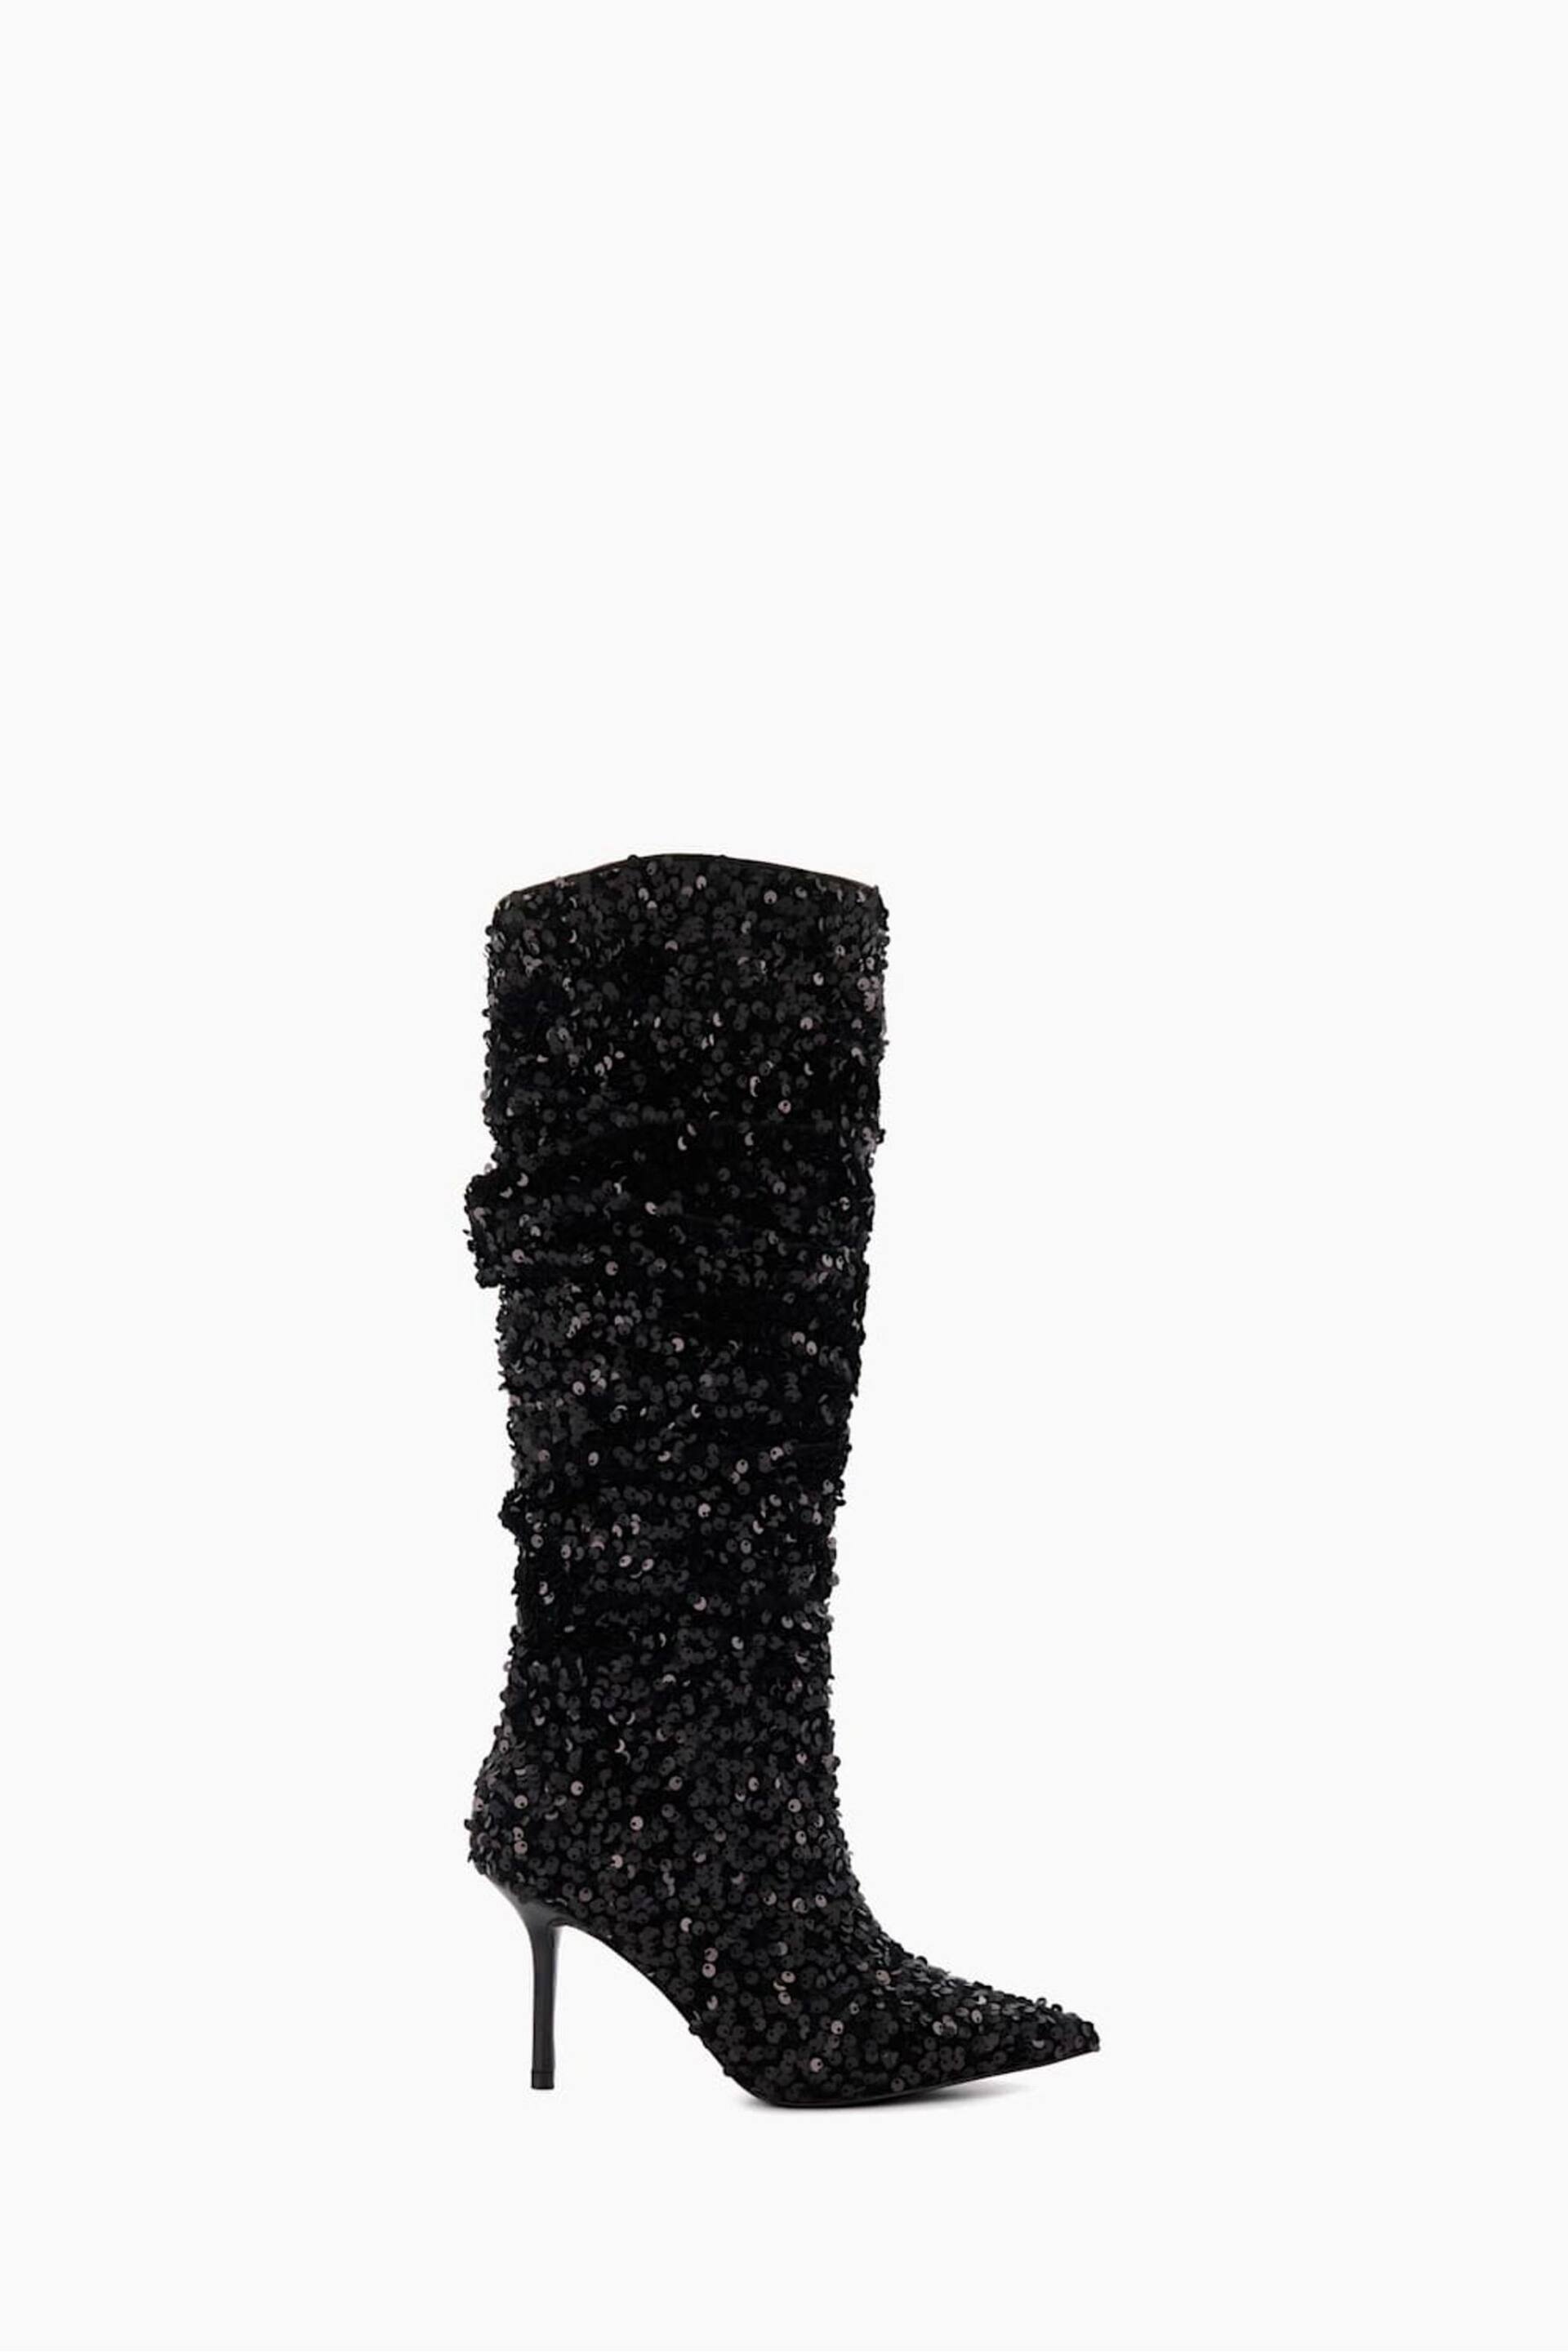 Dune London Black Sensational Sequin Knee-High Boots - Image 1 of 5